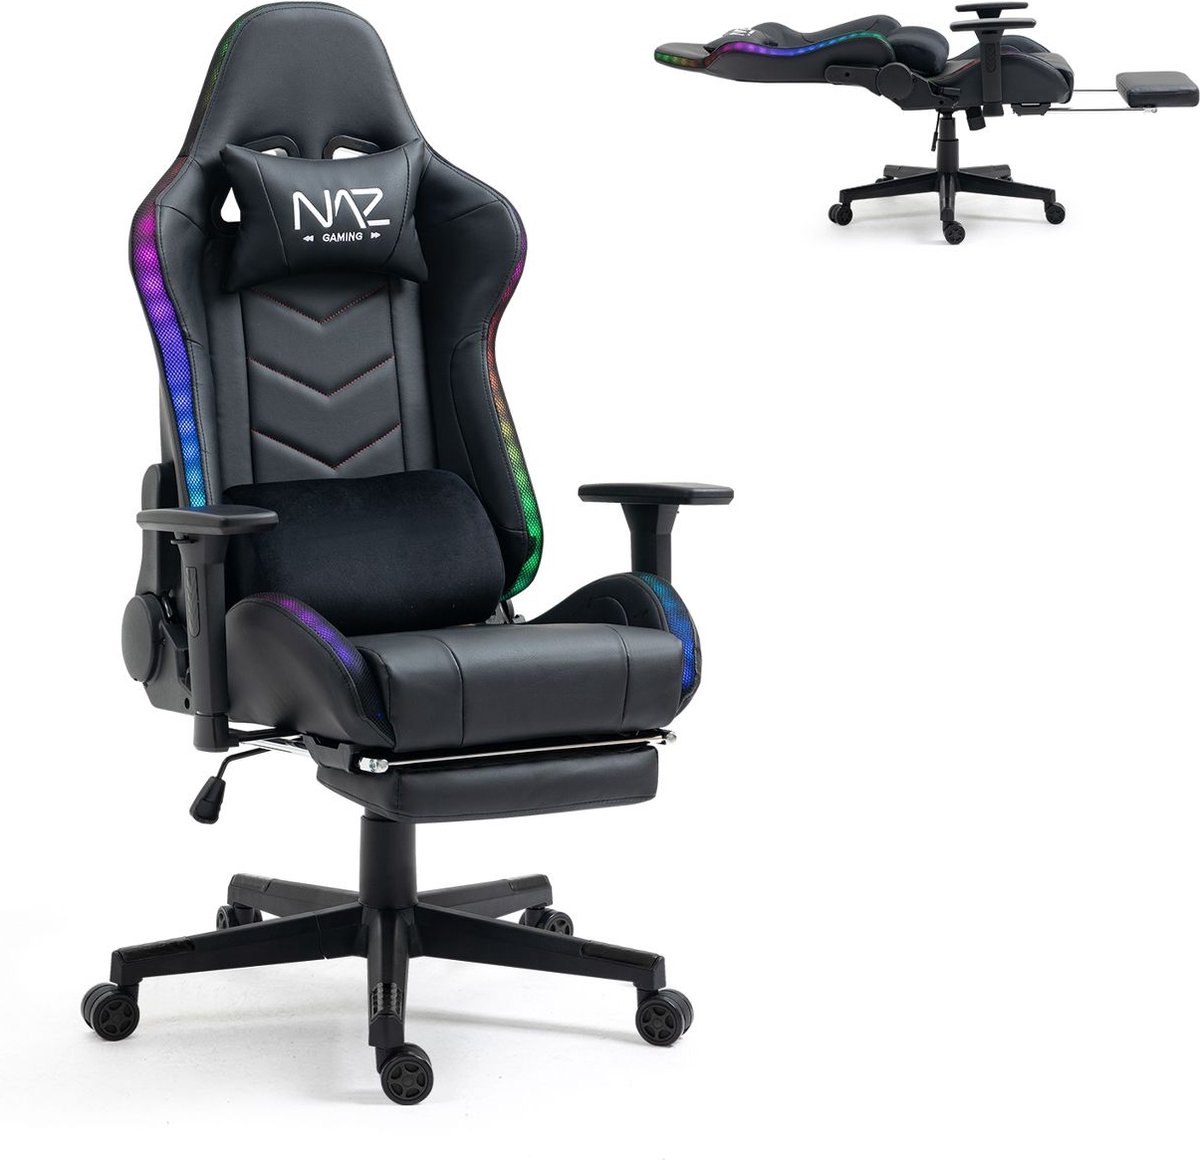 GTI Naz Pro Led - Gamingstoel - Gaming stoel - Gamestoel - Ergonomisch - Voetensteun - Ligstand - Stoel met led verlichting -